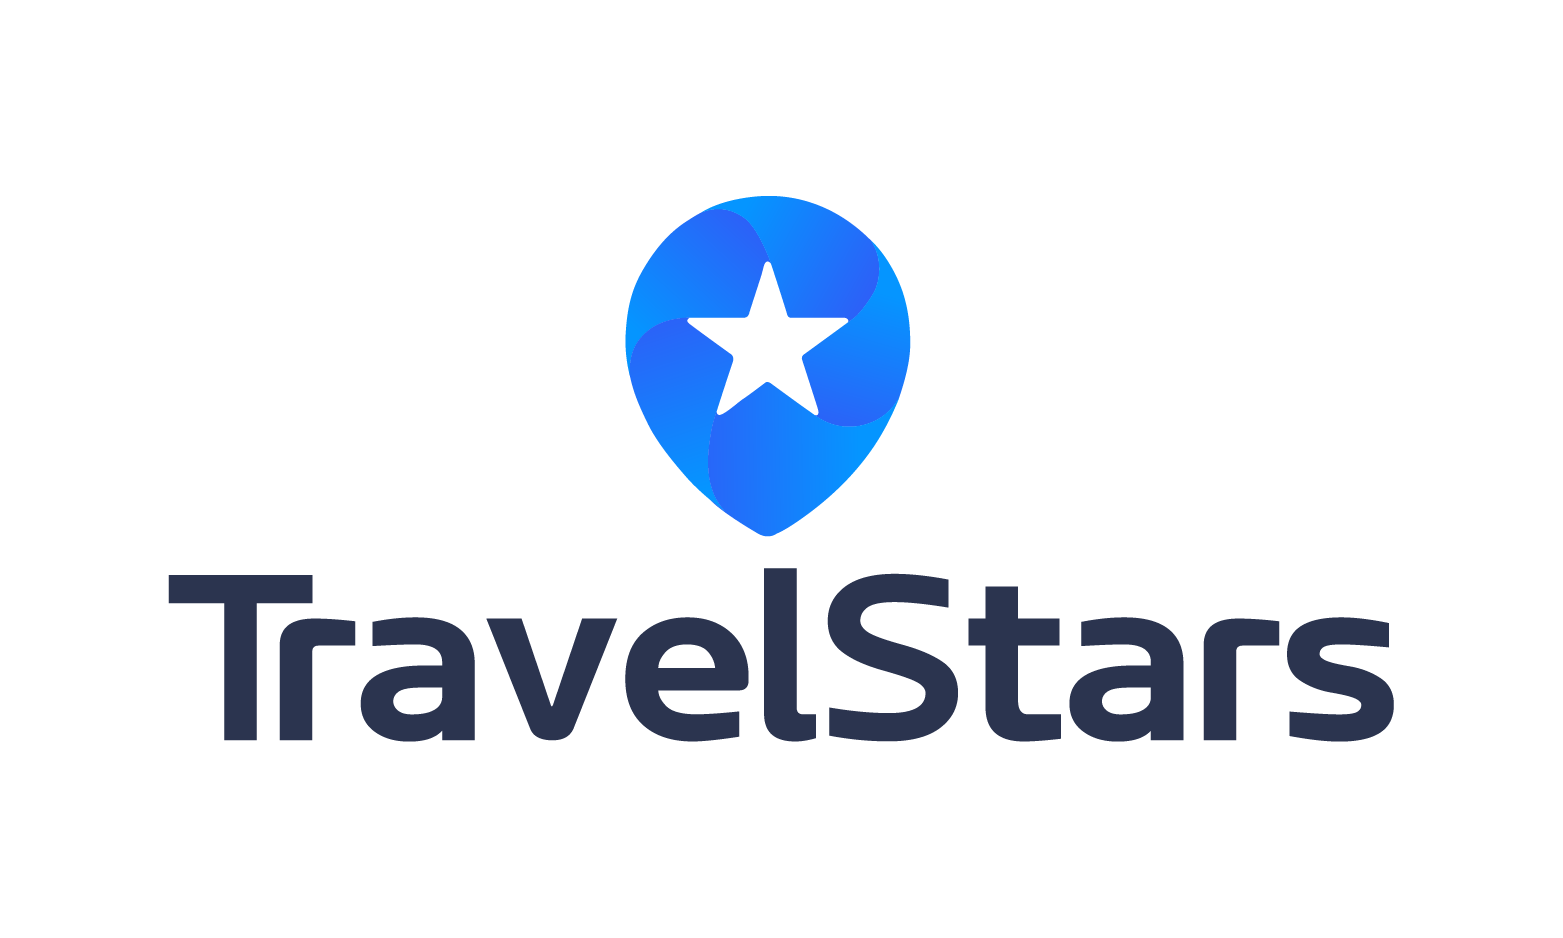 Travelstars.com - Creative brandable domain for sale